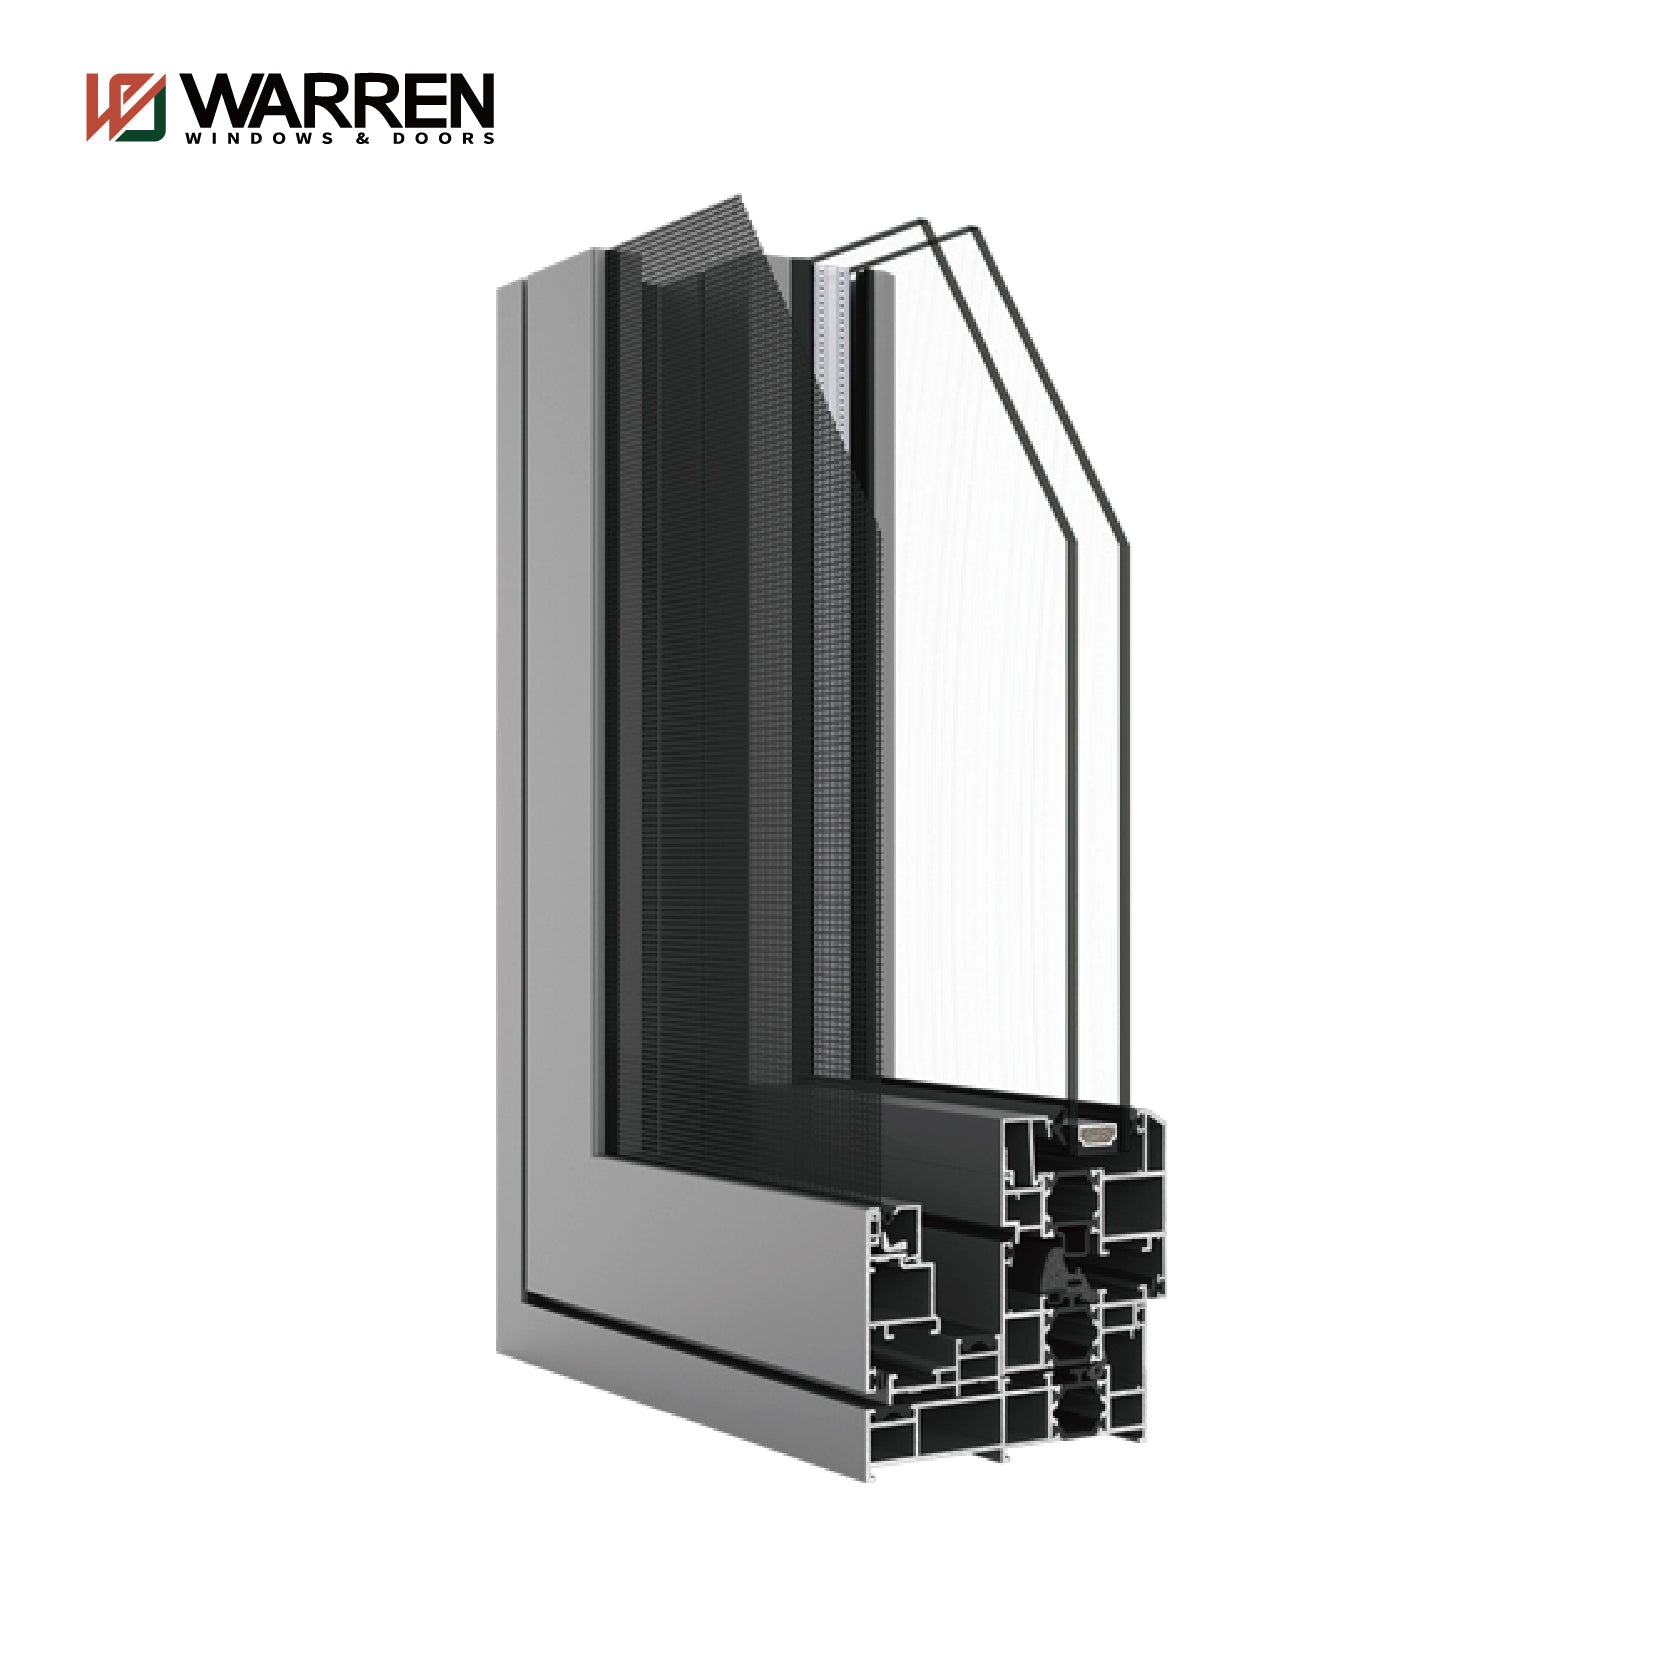 Warren Factory Supply  Hot Sale Aluminum Casement Window With Screen Windows With Screen